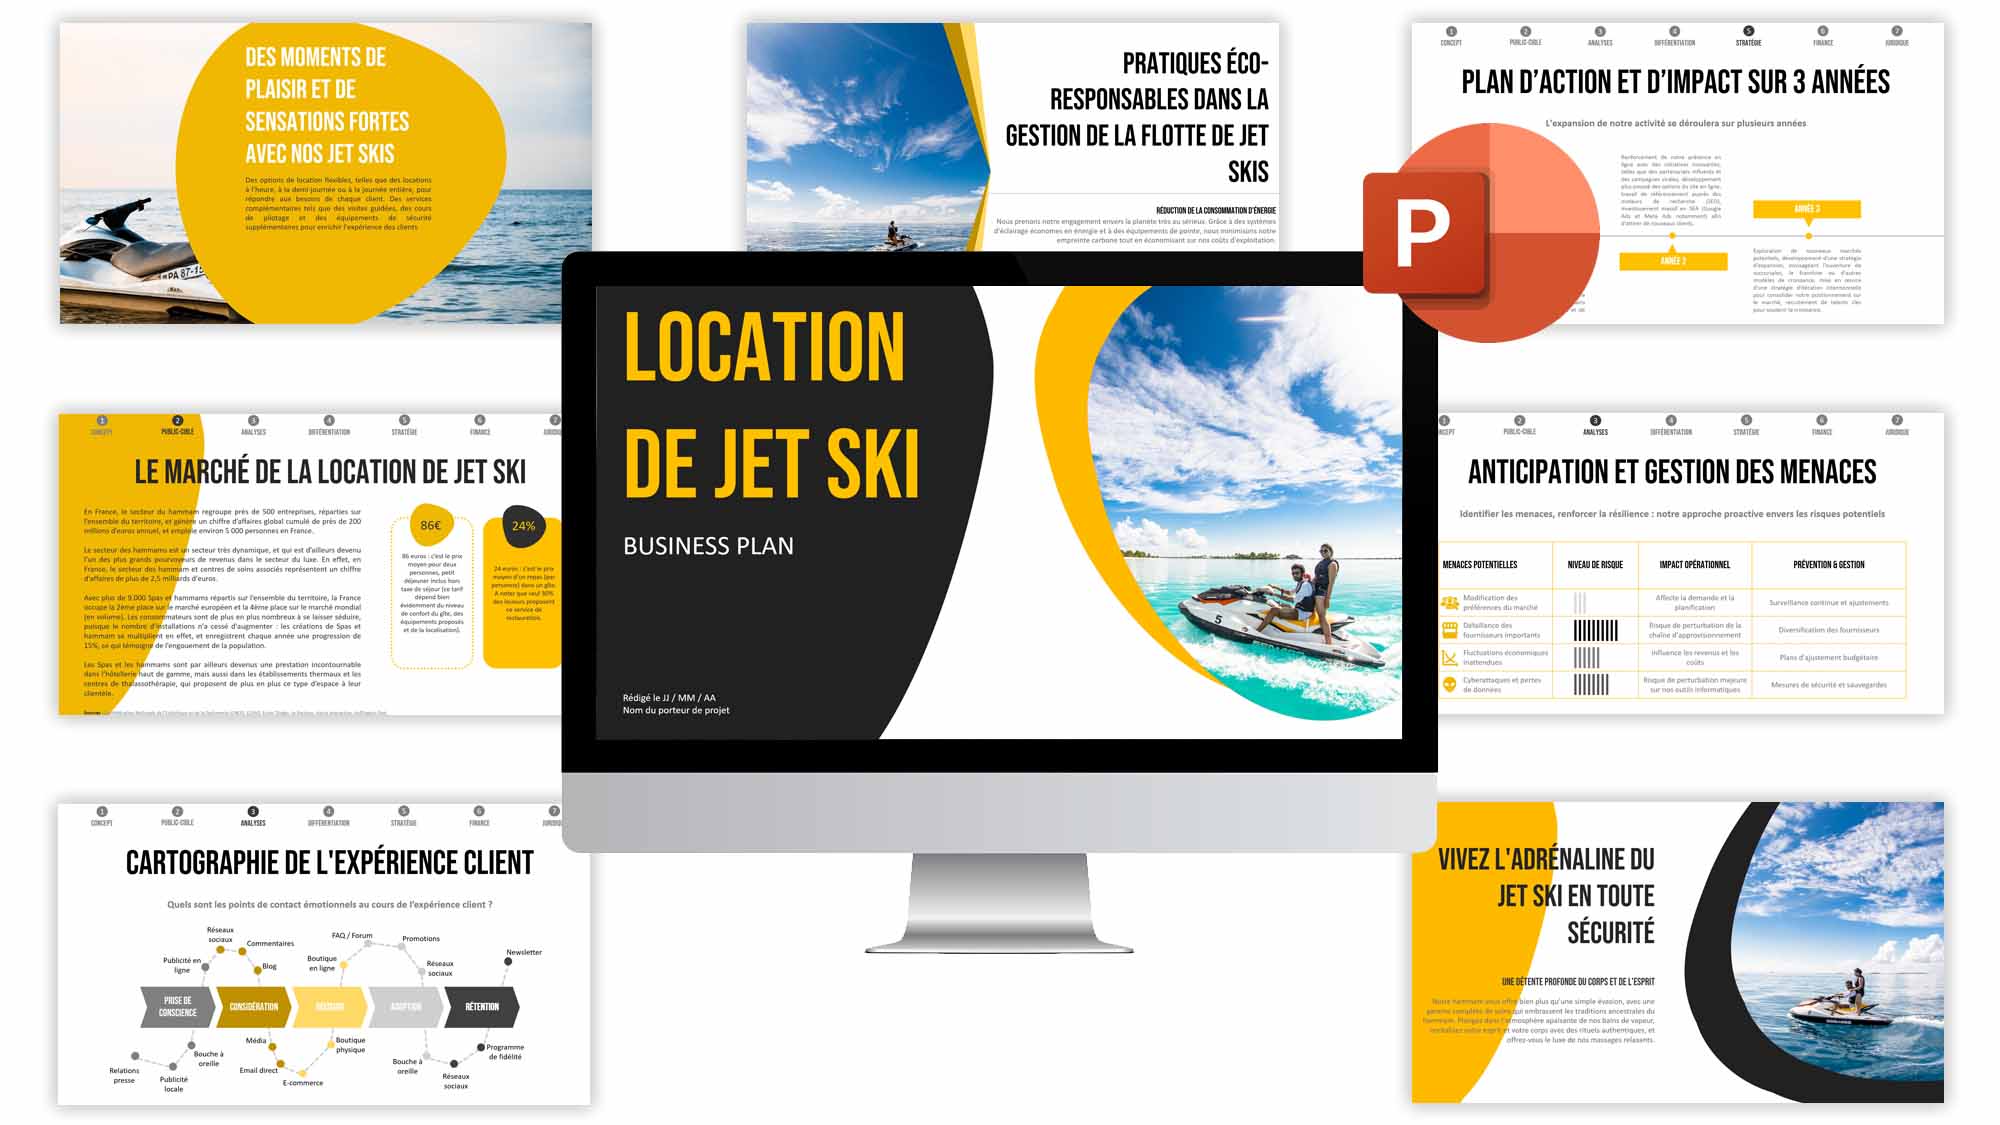 business plan location jet ski